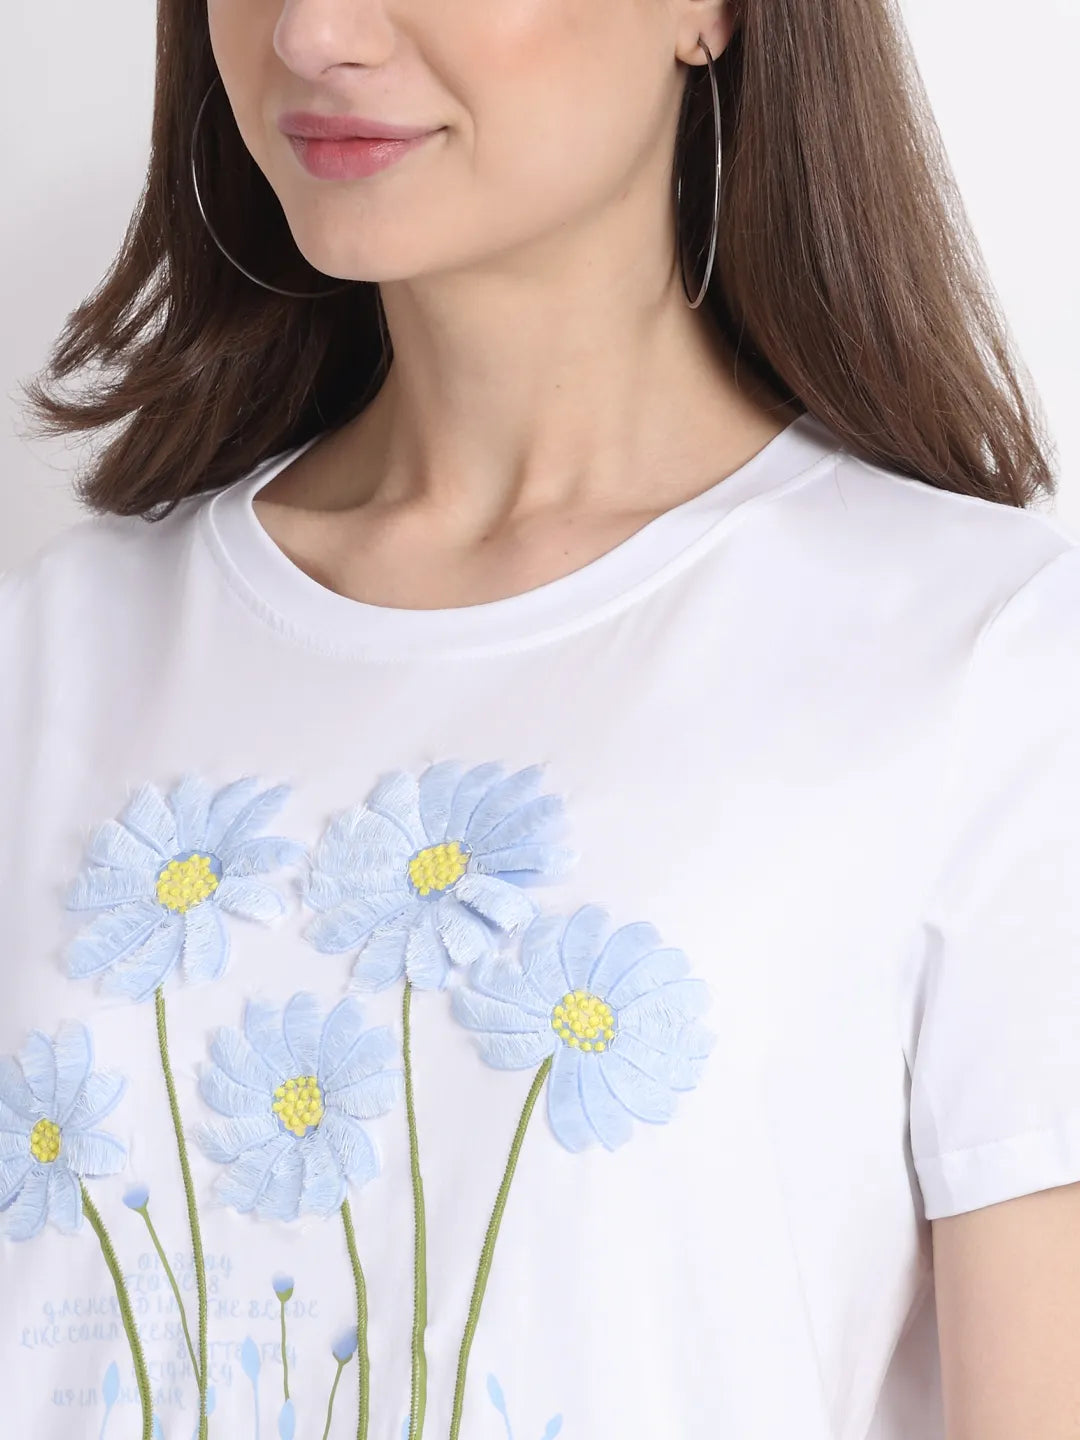 Women White Round Neck Hosiery Floral Print T-Shirt